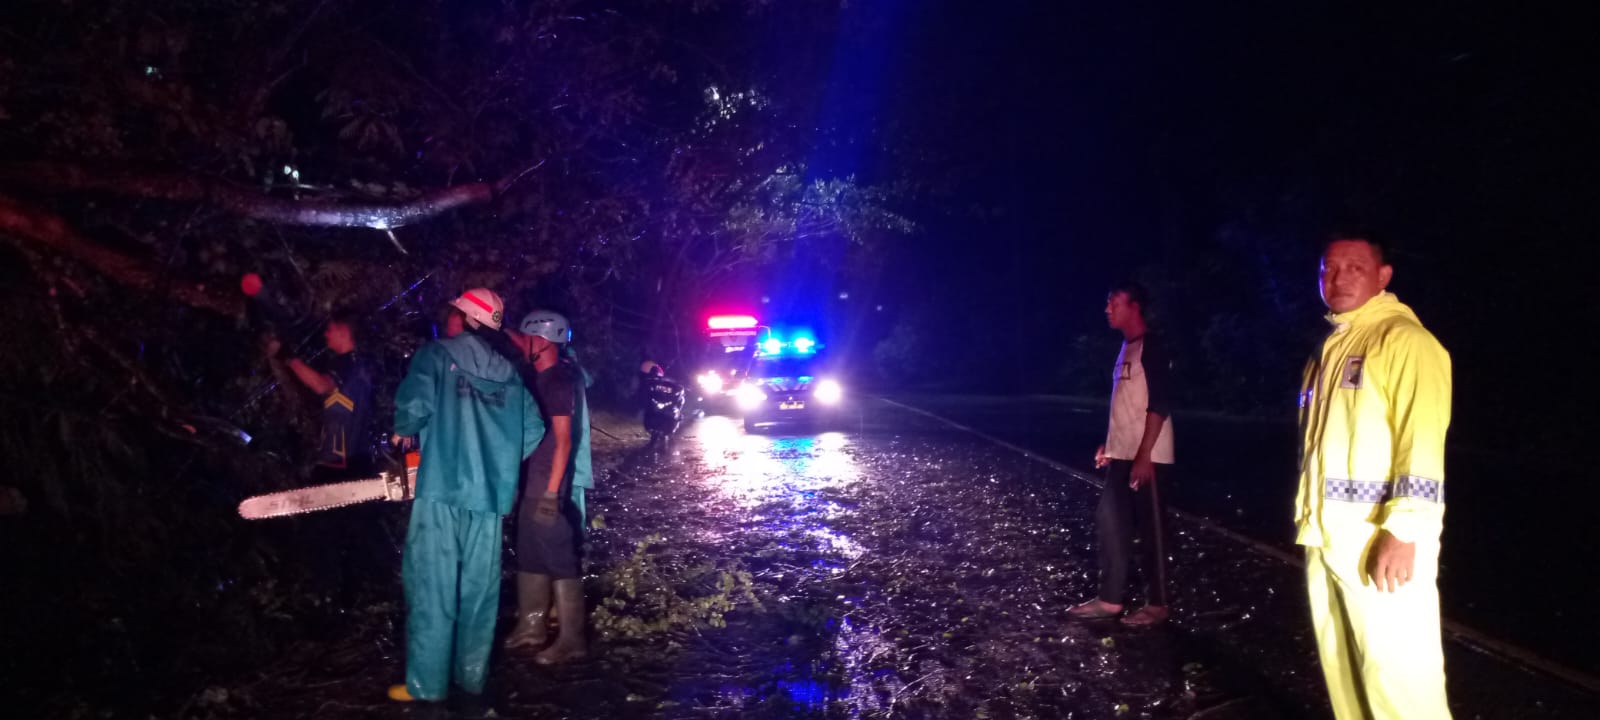 Personil Polsek Padangan Sigap Bantu Evakuasi Pohon Tumbang  di Jalan Raya Bojonegoro - Ngawi